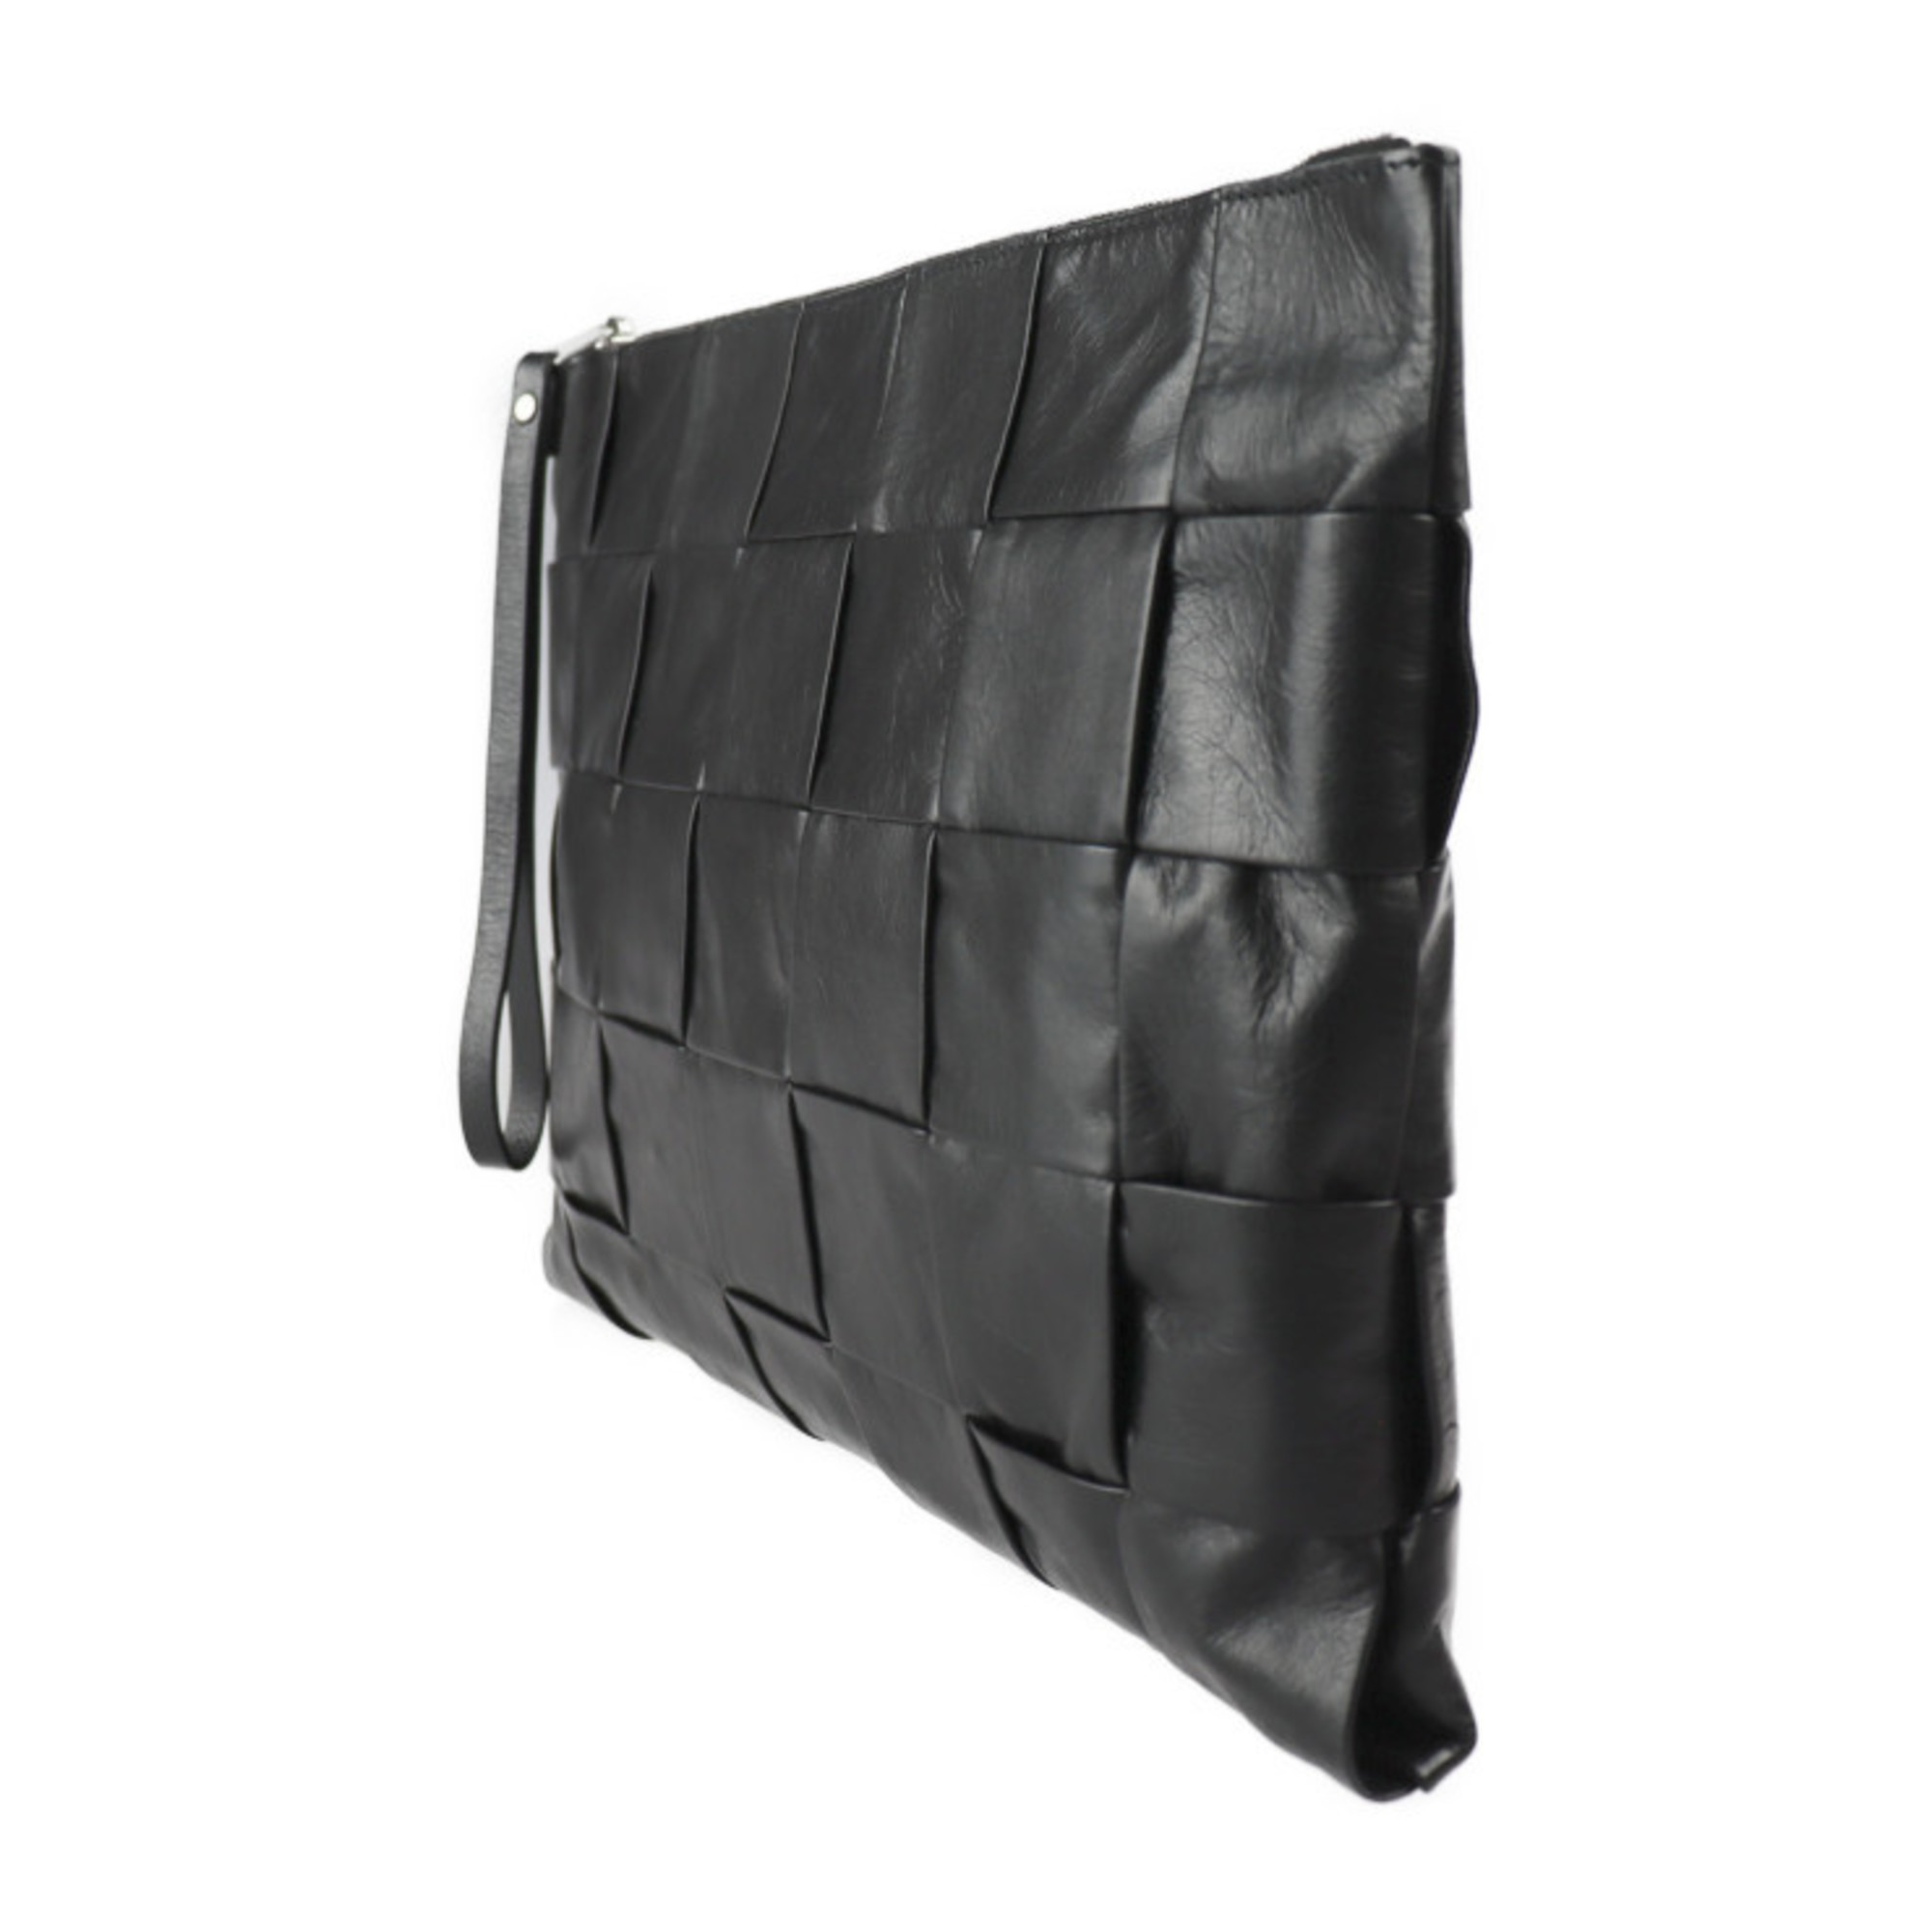 BOTTEGA VENETA Maxi intrecciato clutch bag leather black silver metal fittings second pouch